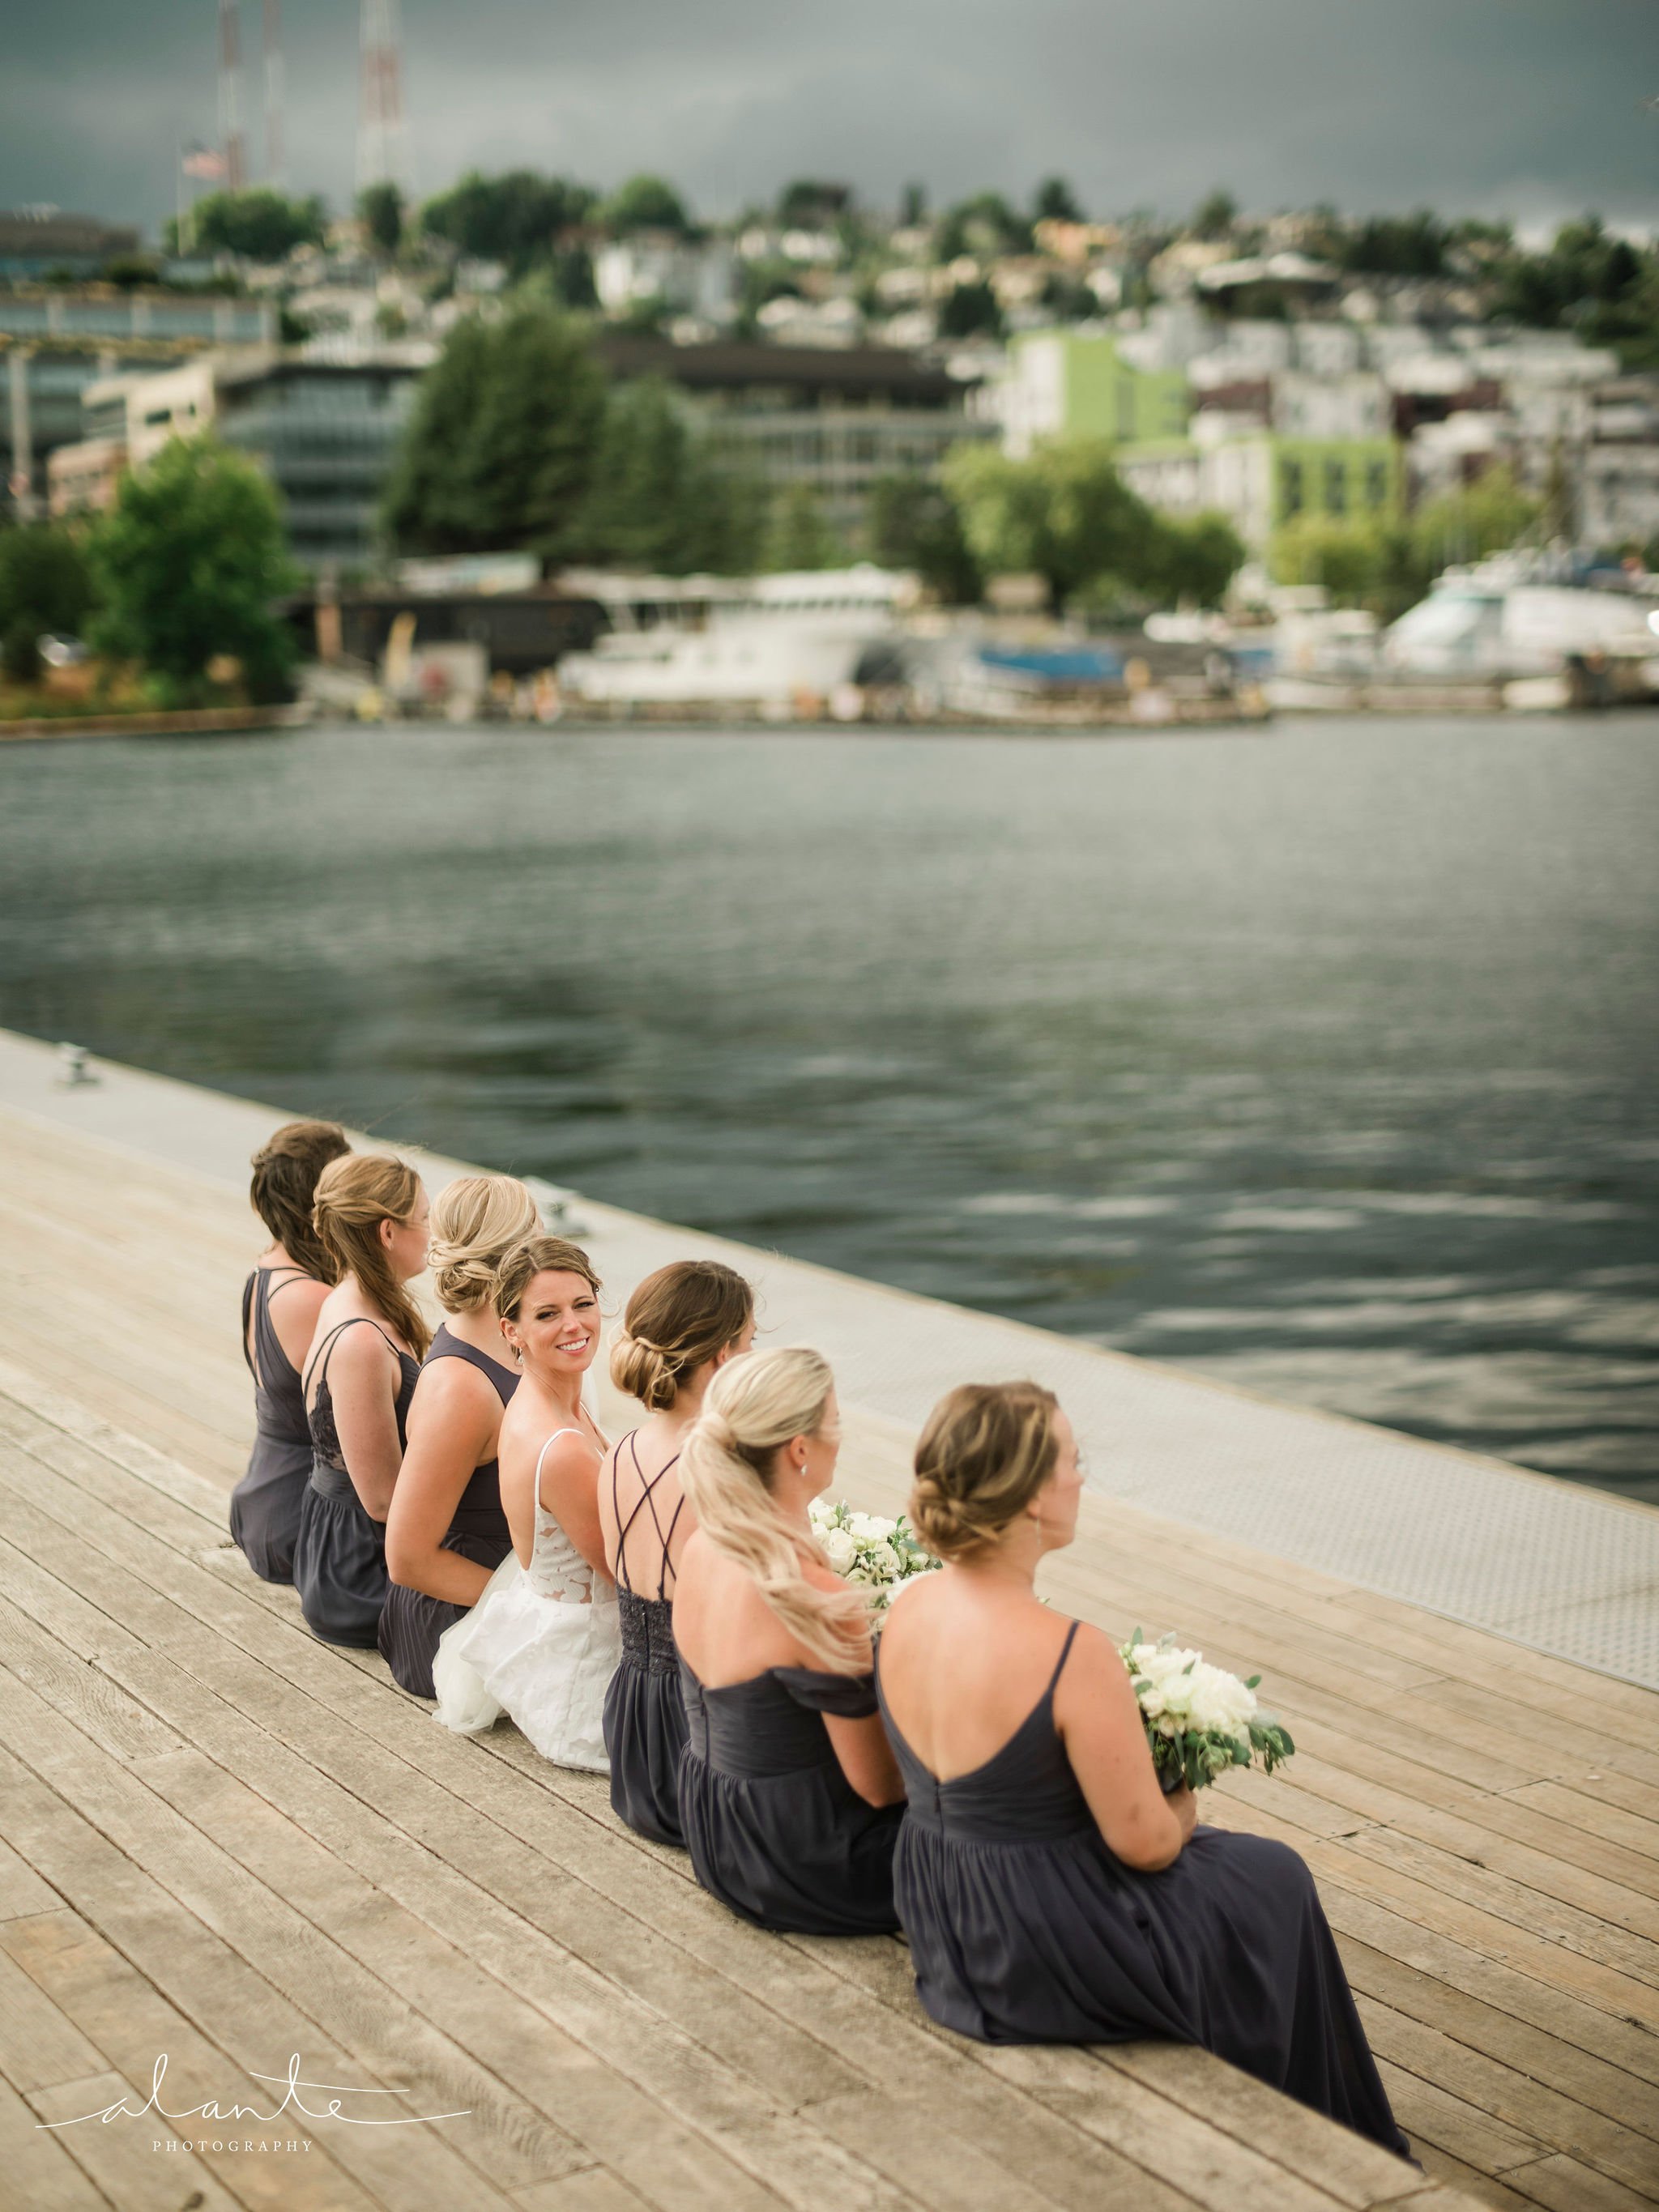 Alante-Photography-Seattle-Washington-Wedding-Dockside-Dukes-Lake-Union-070.jpg